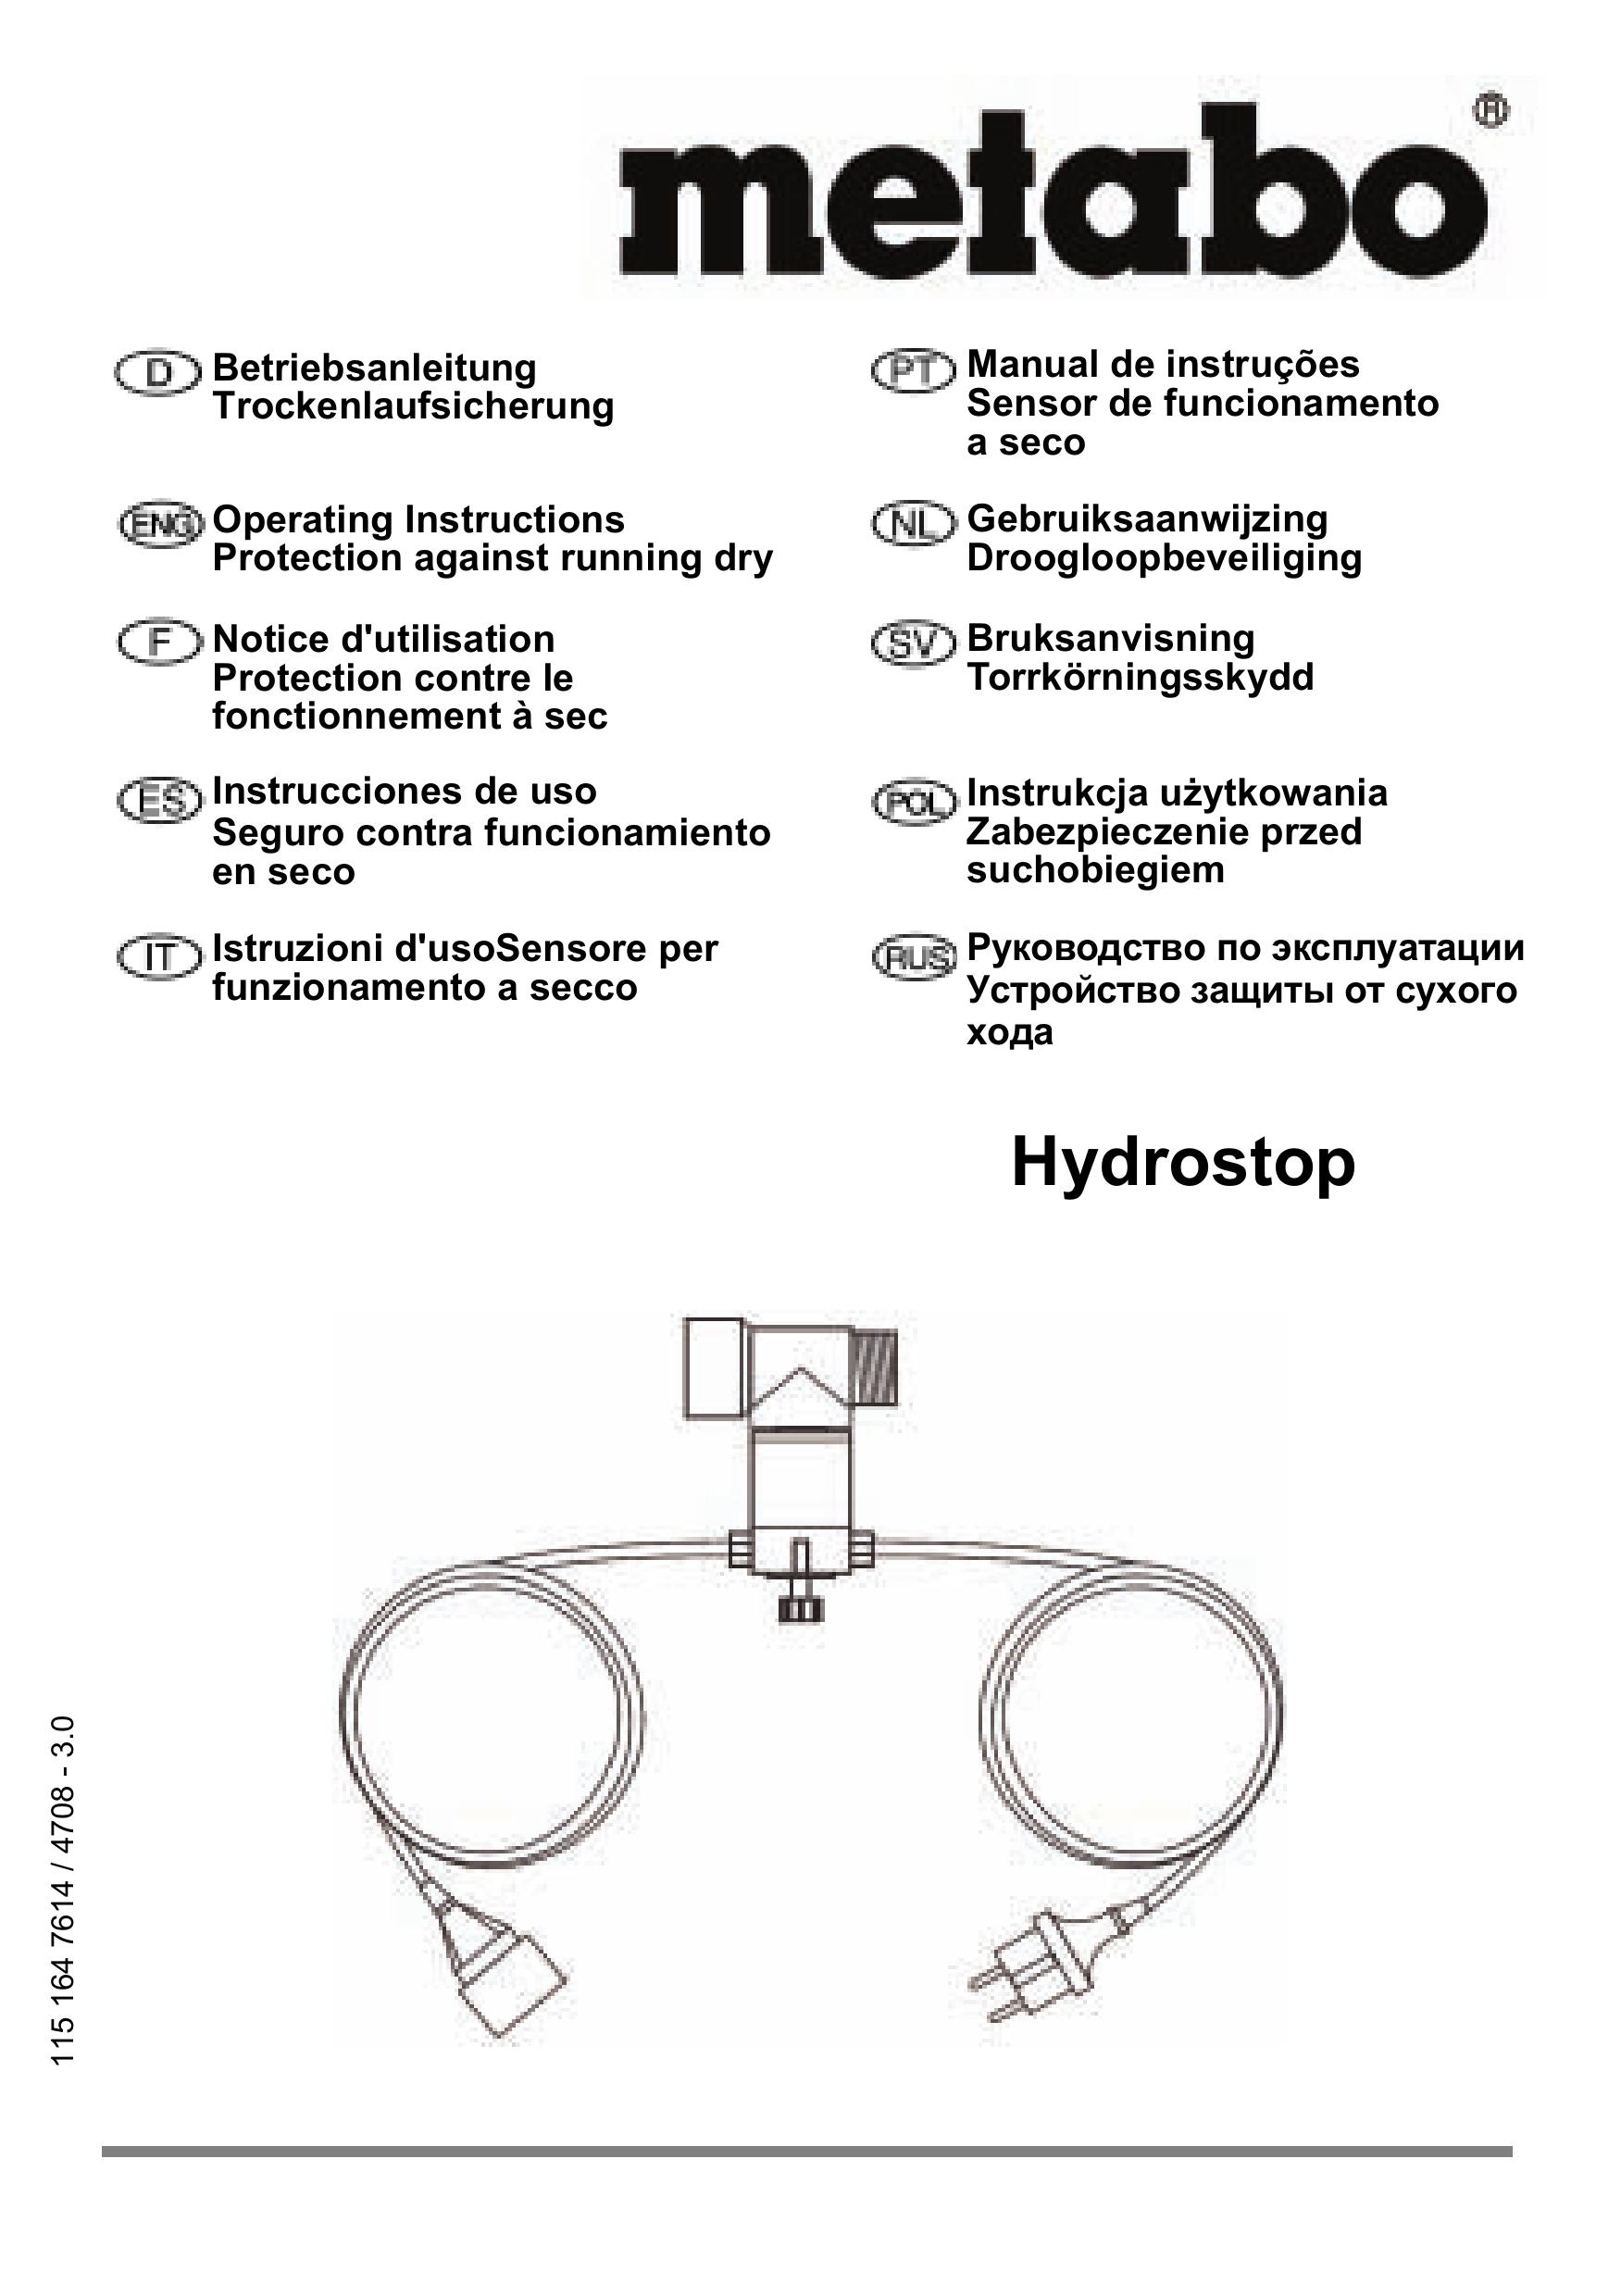 Metabo Hydrostop Irrigation System User Manual